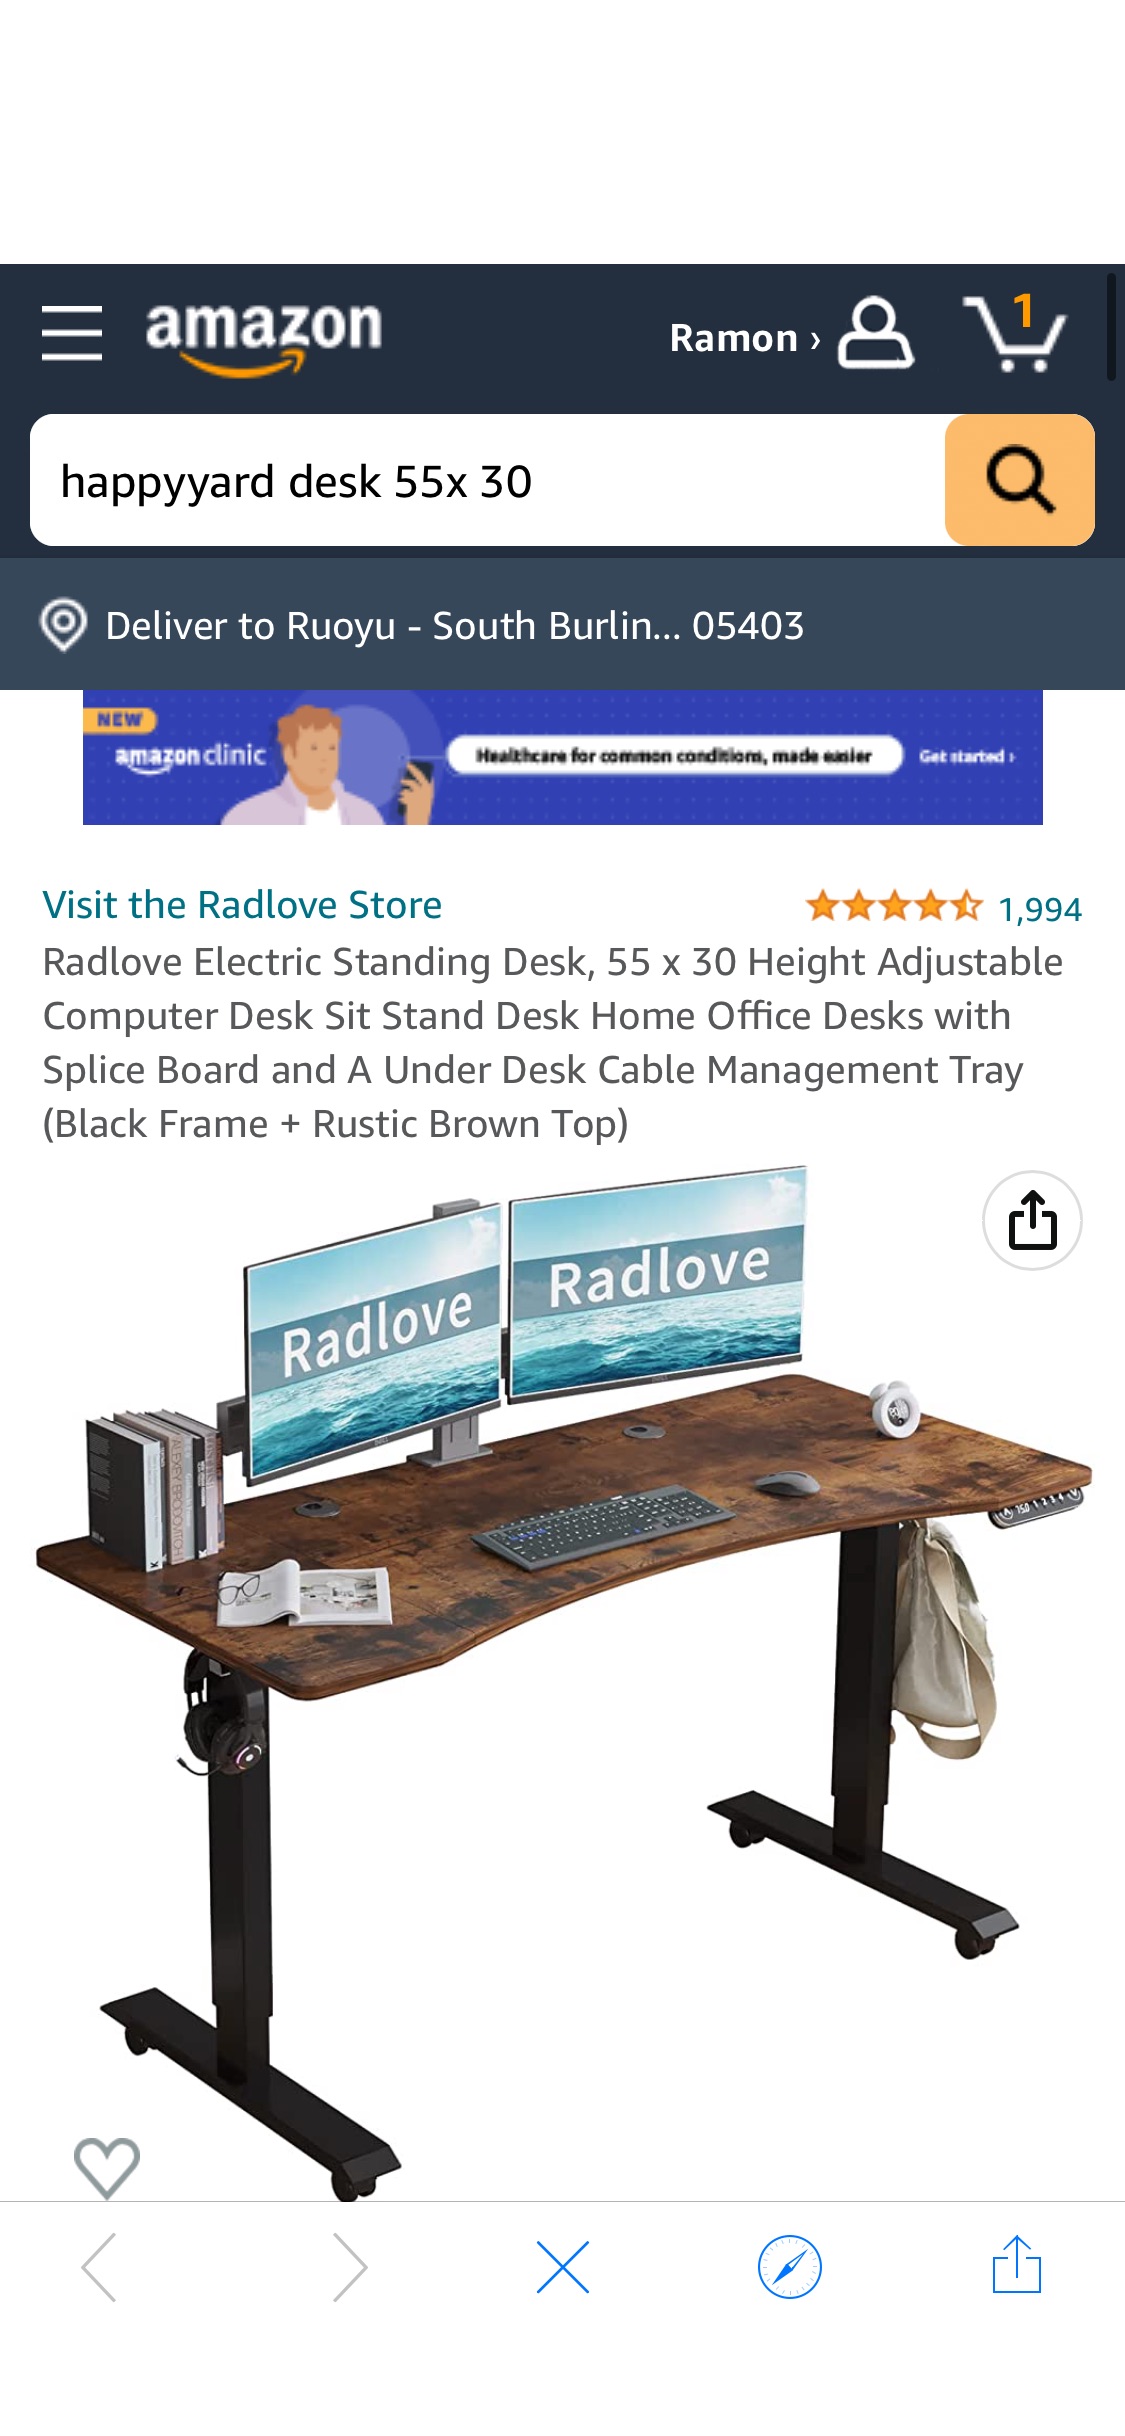 Amazon.com: Radlove Electric Standing Desk, 55 x 30 Height Adjustable Computer Desk Sit Stand Desk Home Office Desks